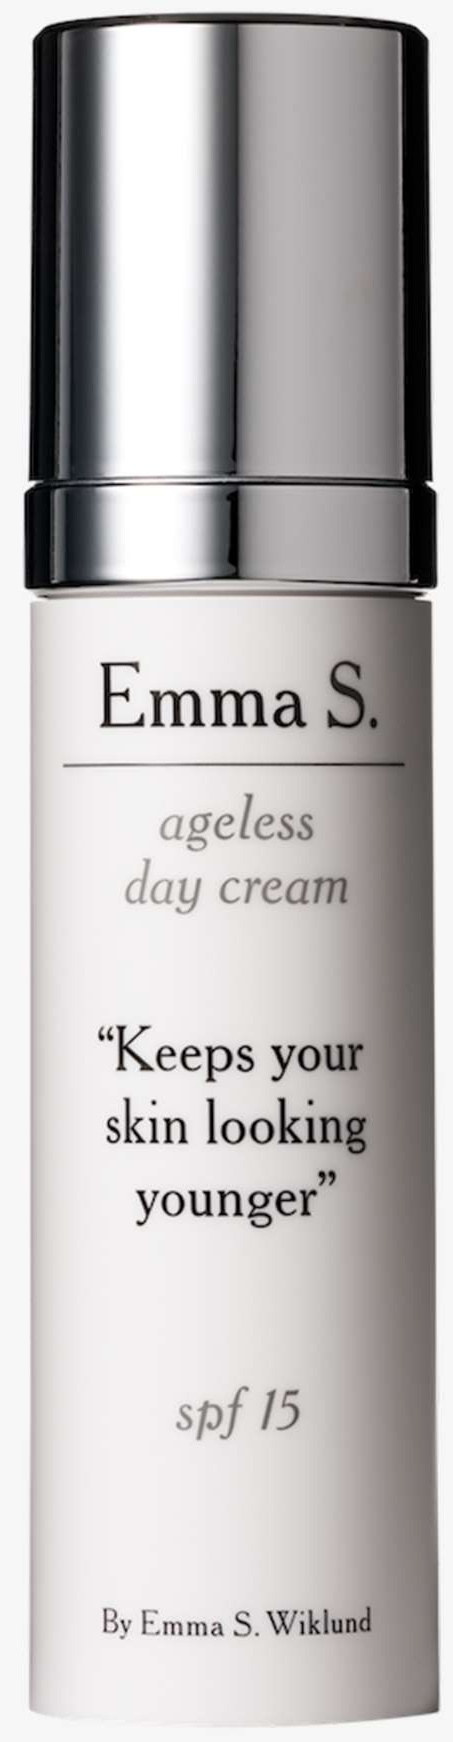 Emma S. Ageless Day Cream Spf 15